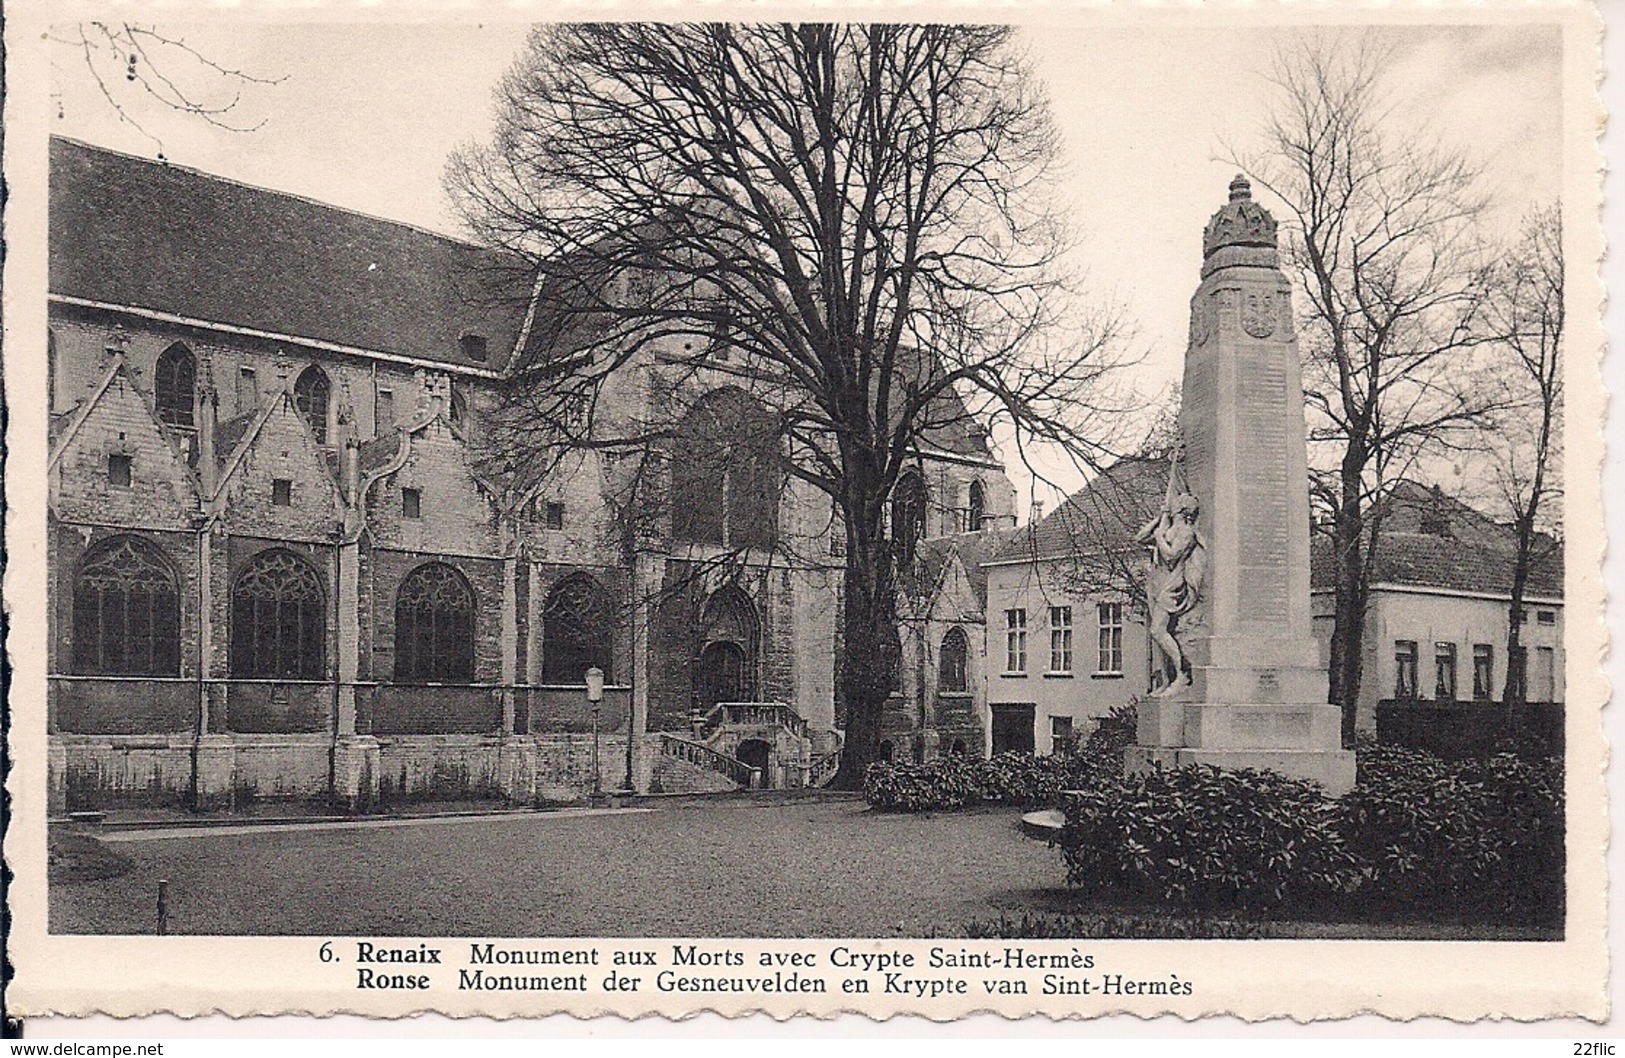 RONSE RENAIX MONUMENT DER GESNEUVELDEN EN KRYGTE VAN SINT-HERMES - Renaix - Ronse